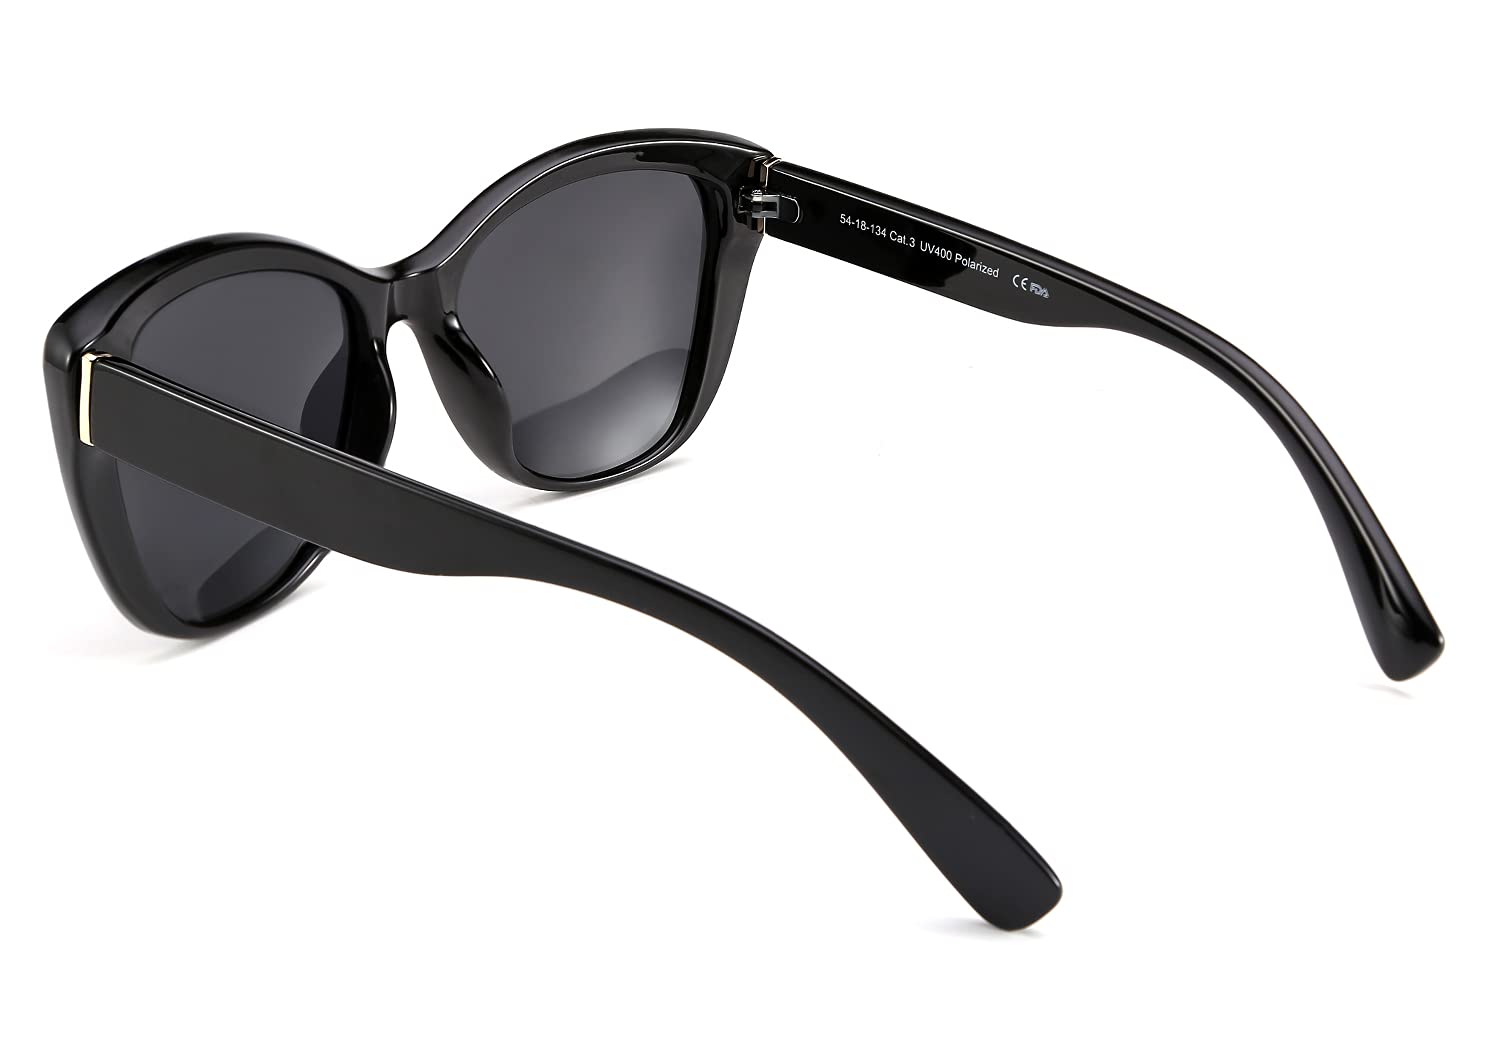 FEISEDY Polarized Vintage Sunglasses American Womens Square Jackie O Cat Eye Sunglasses B2451